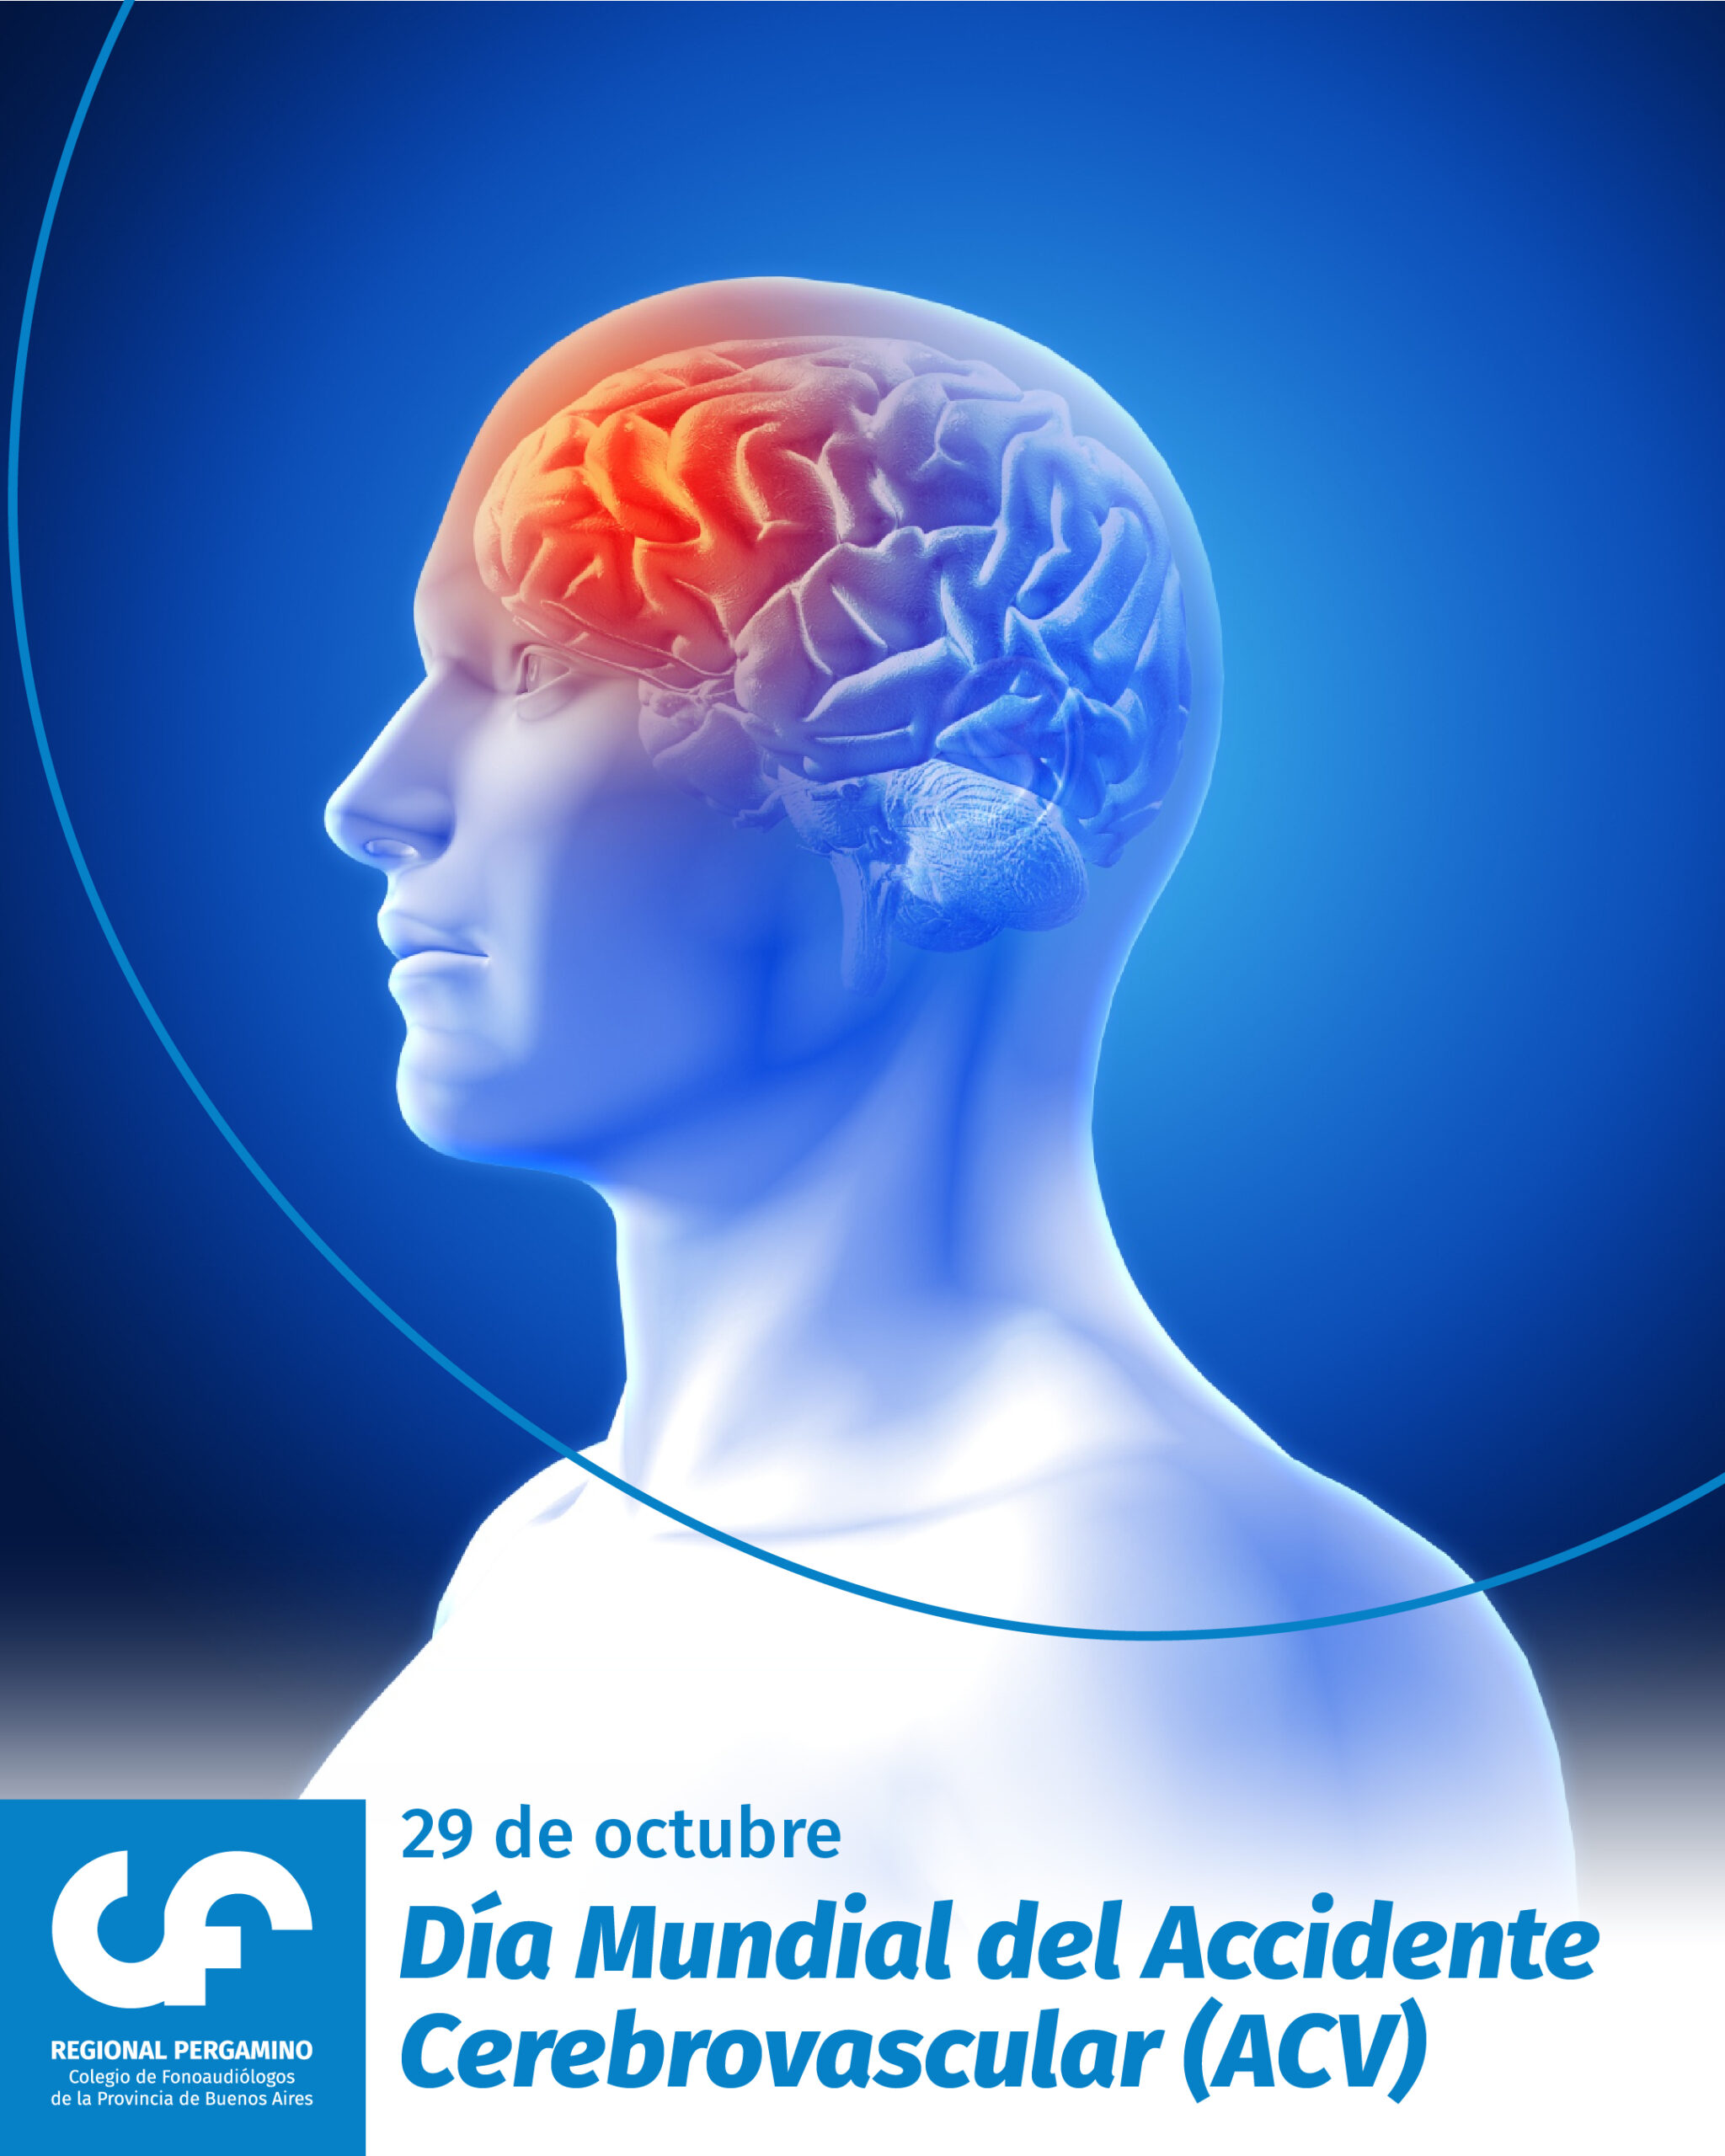 Día Mundial del Accidente Cerebrovascular (ACV)